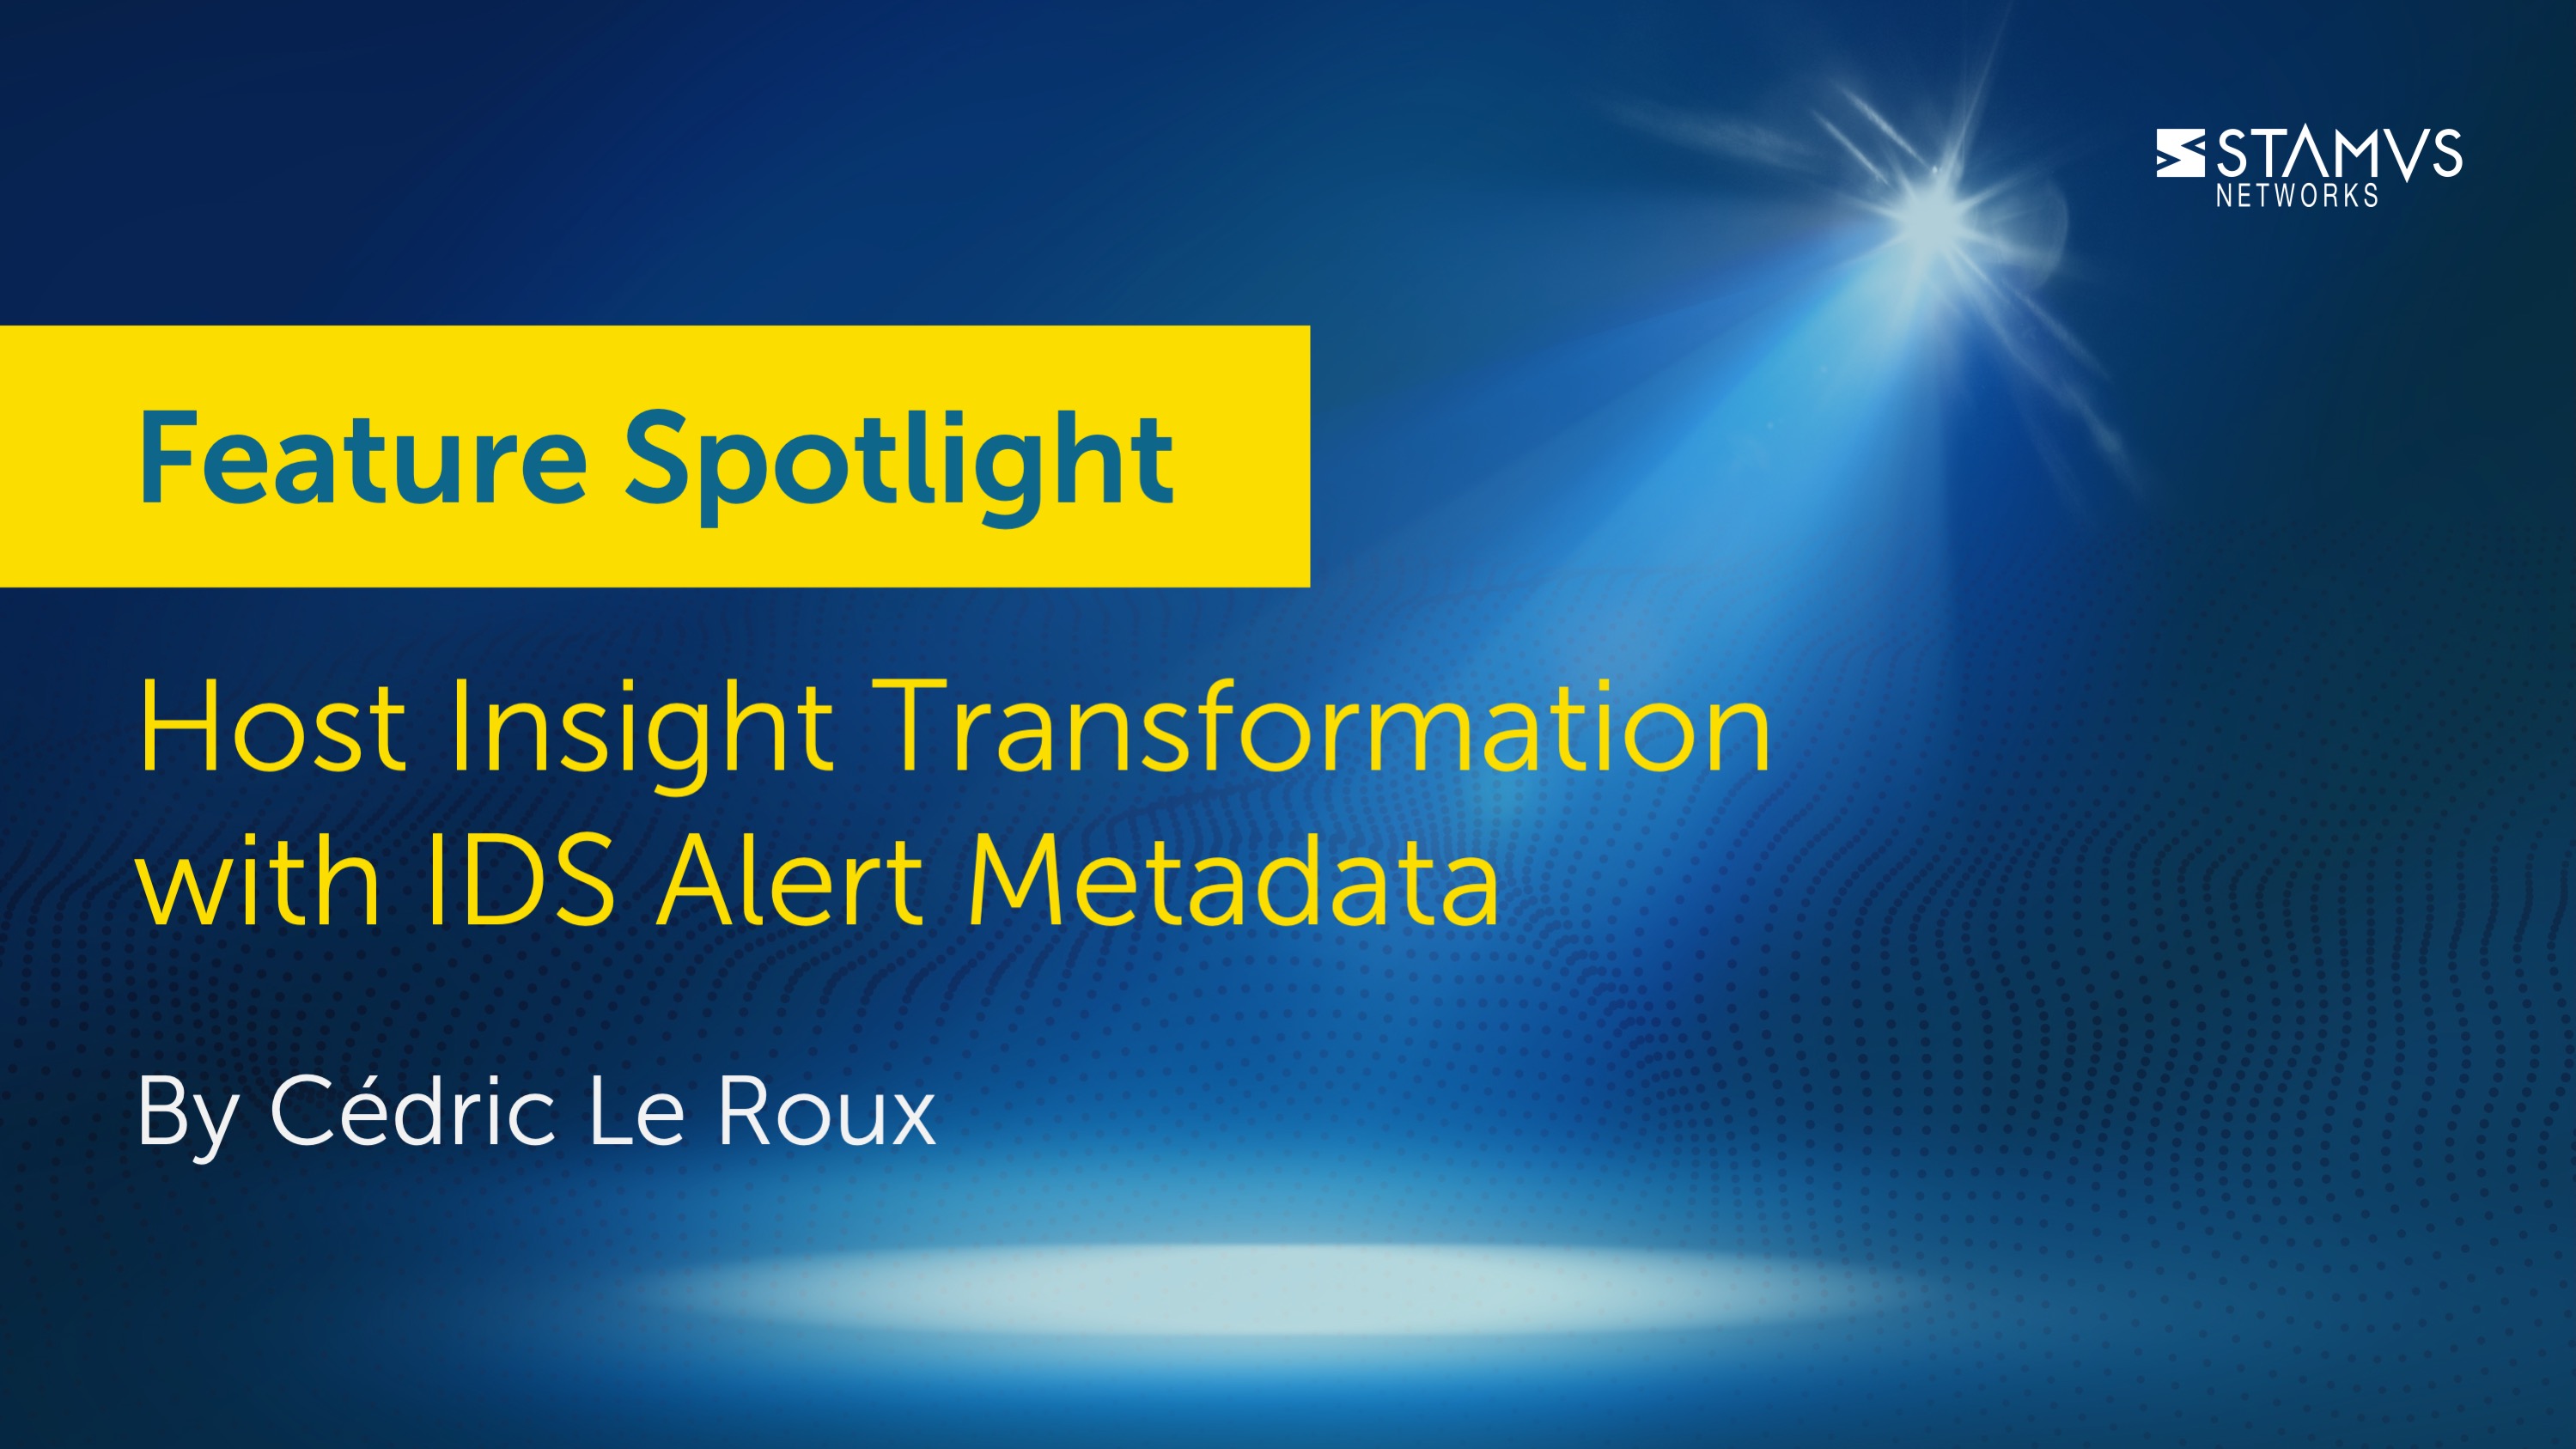 Feature Spotlight: Host Insight Transformation with IDS Alert Metadata